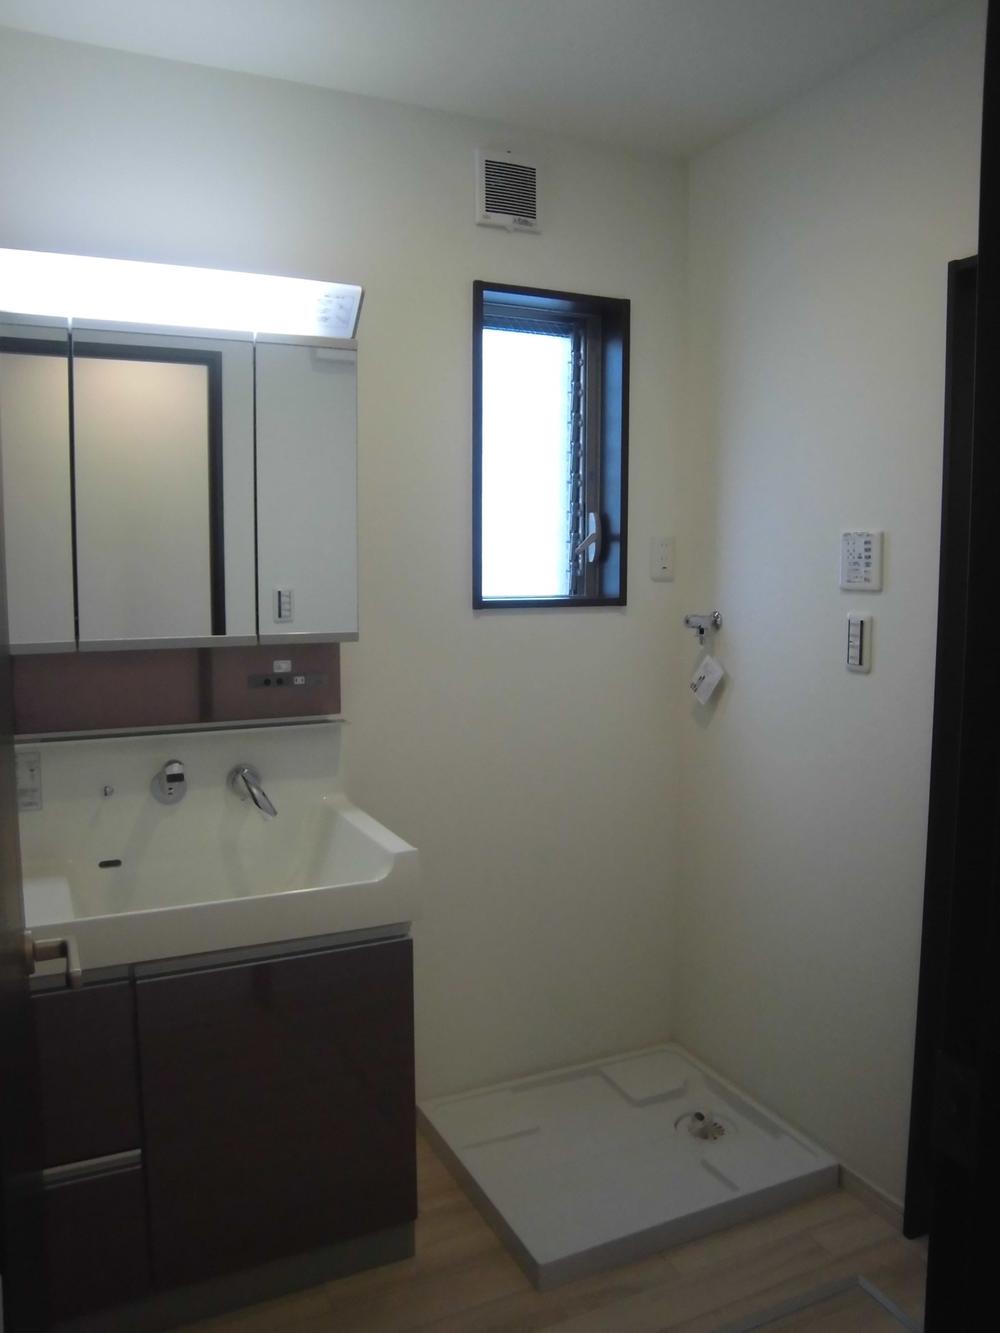 Wash basin, toilet.  [Example of construction] Three-sided mirror